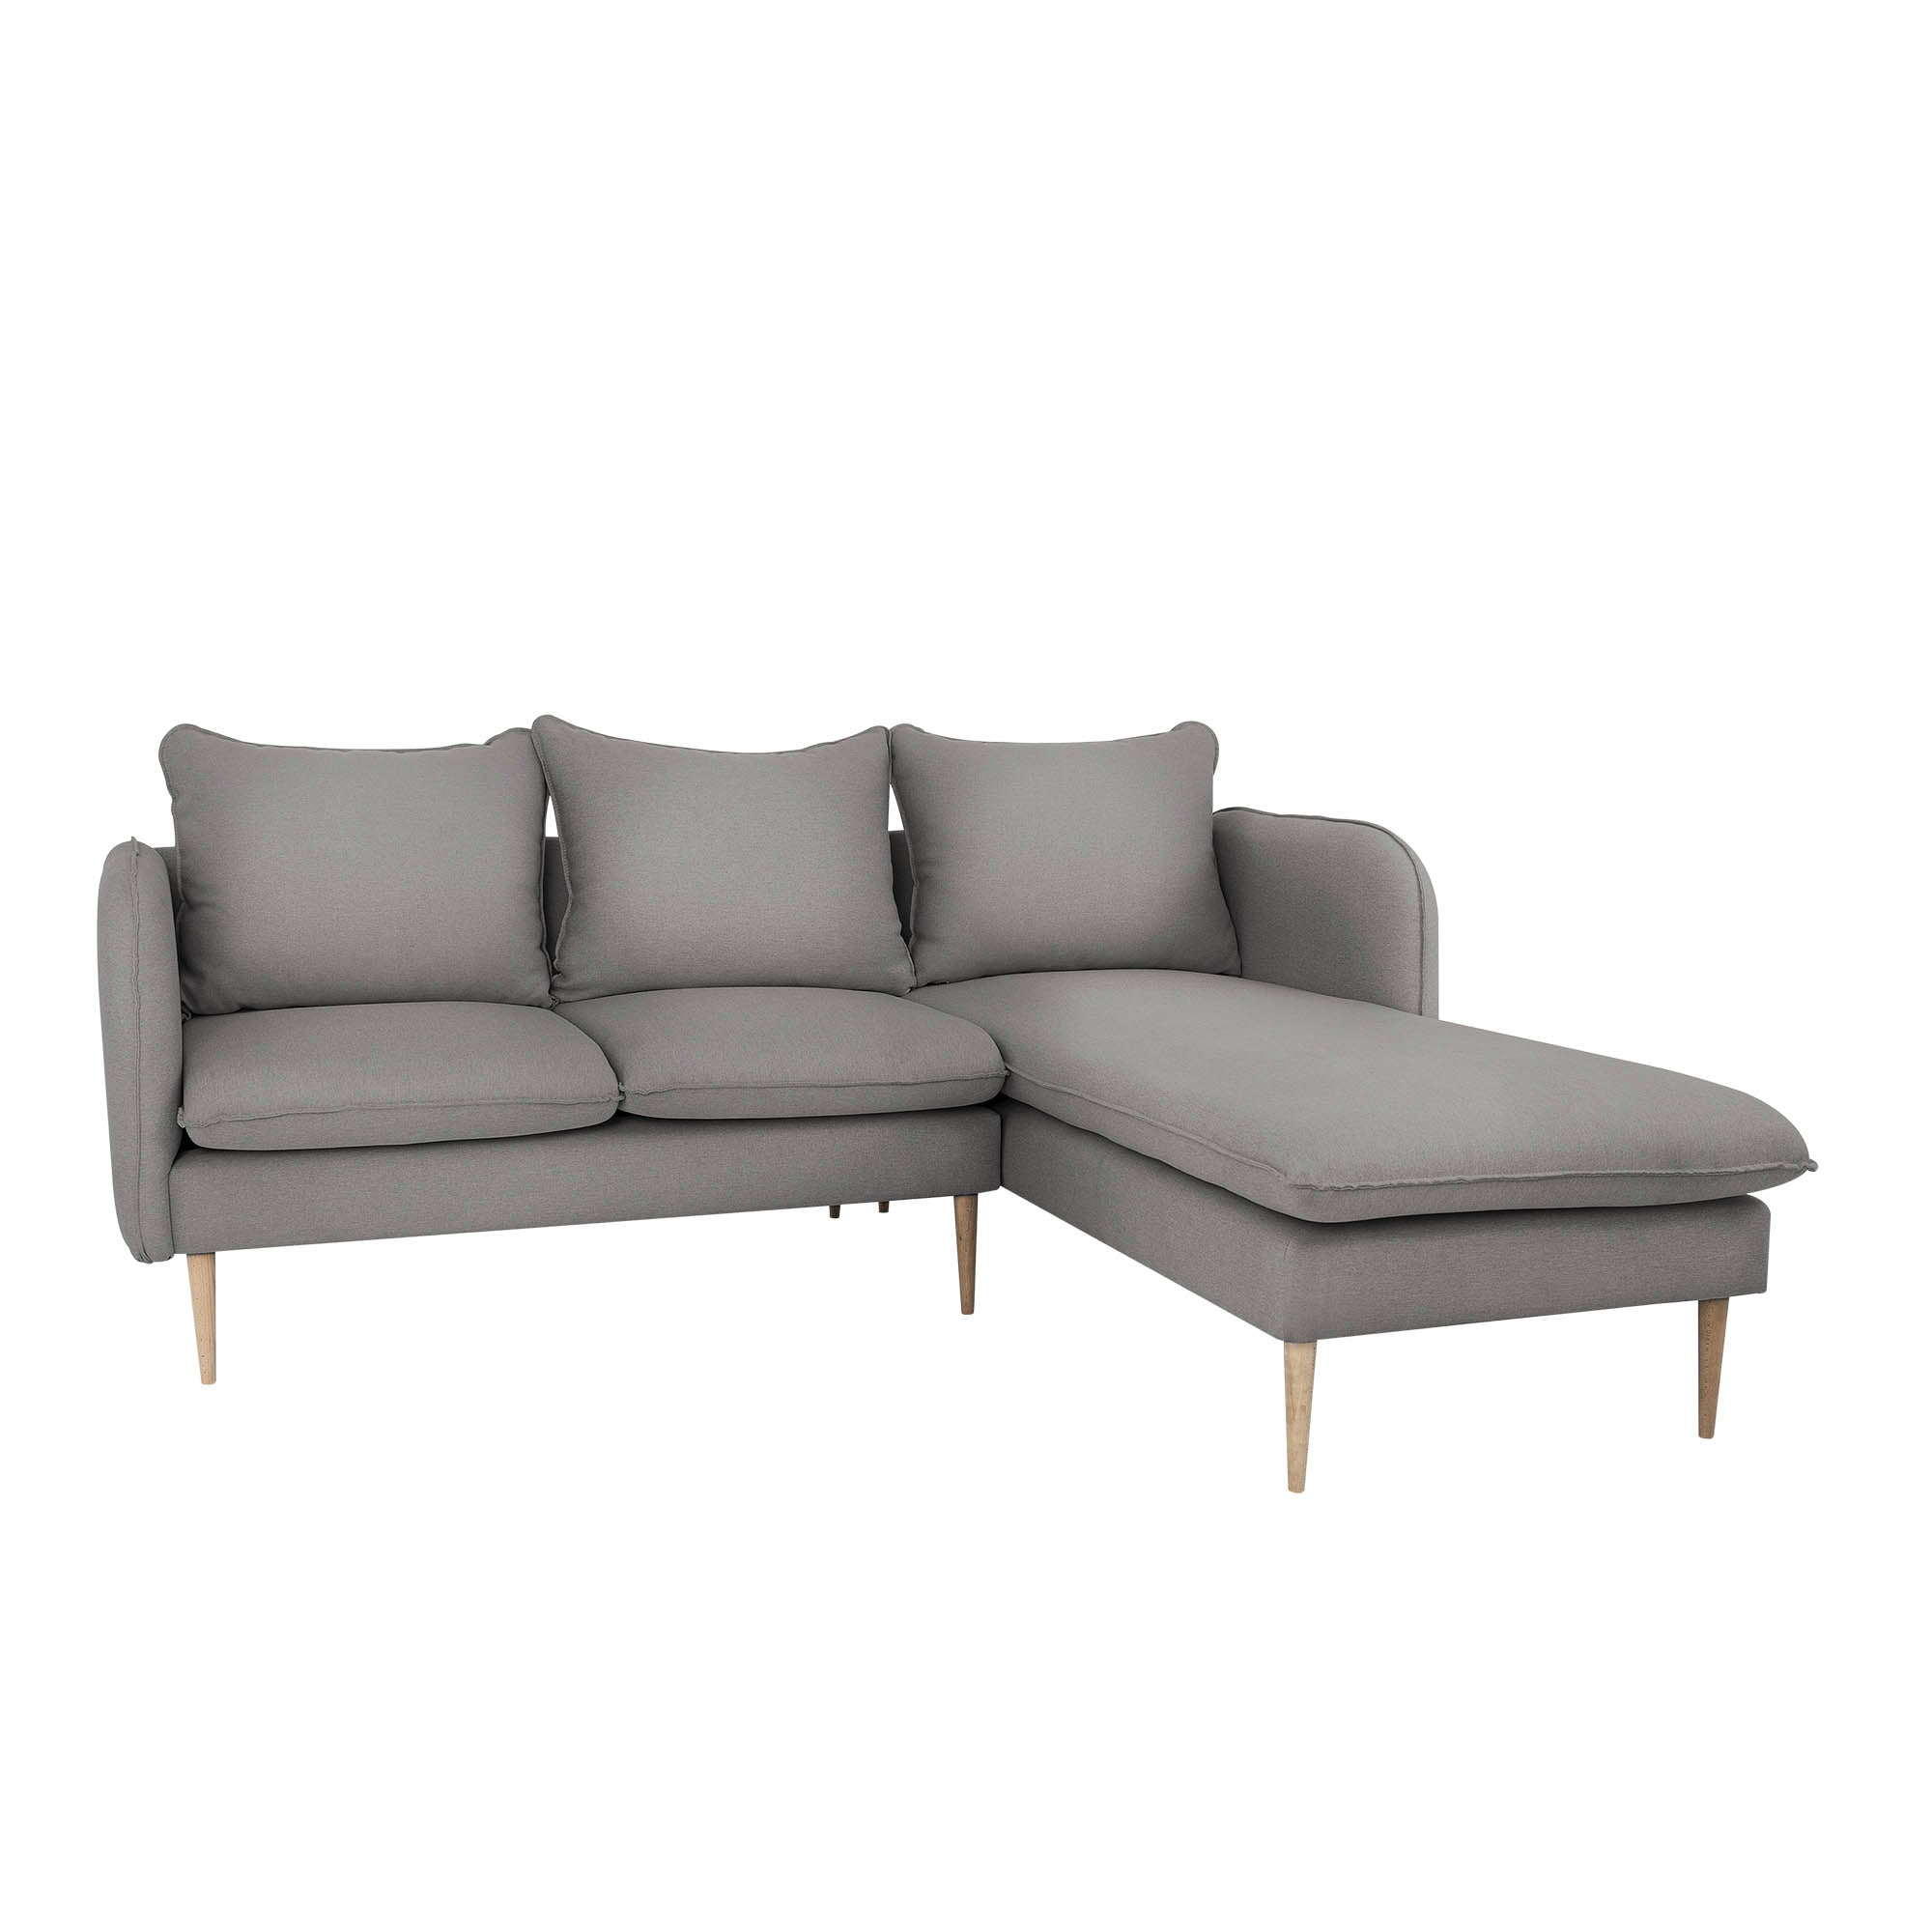 POSH WOOD Corner Sofa Right upholstery colour grey